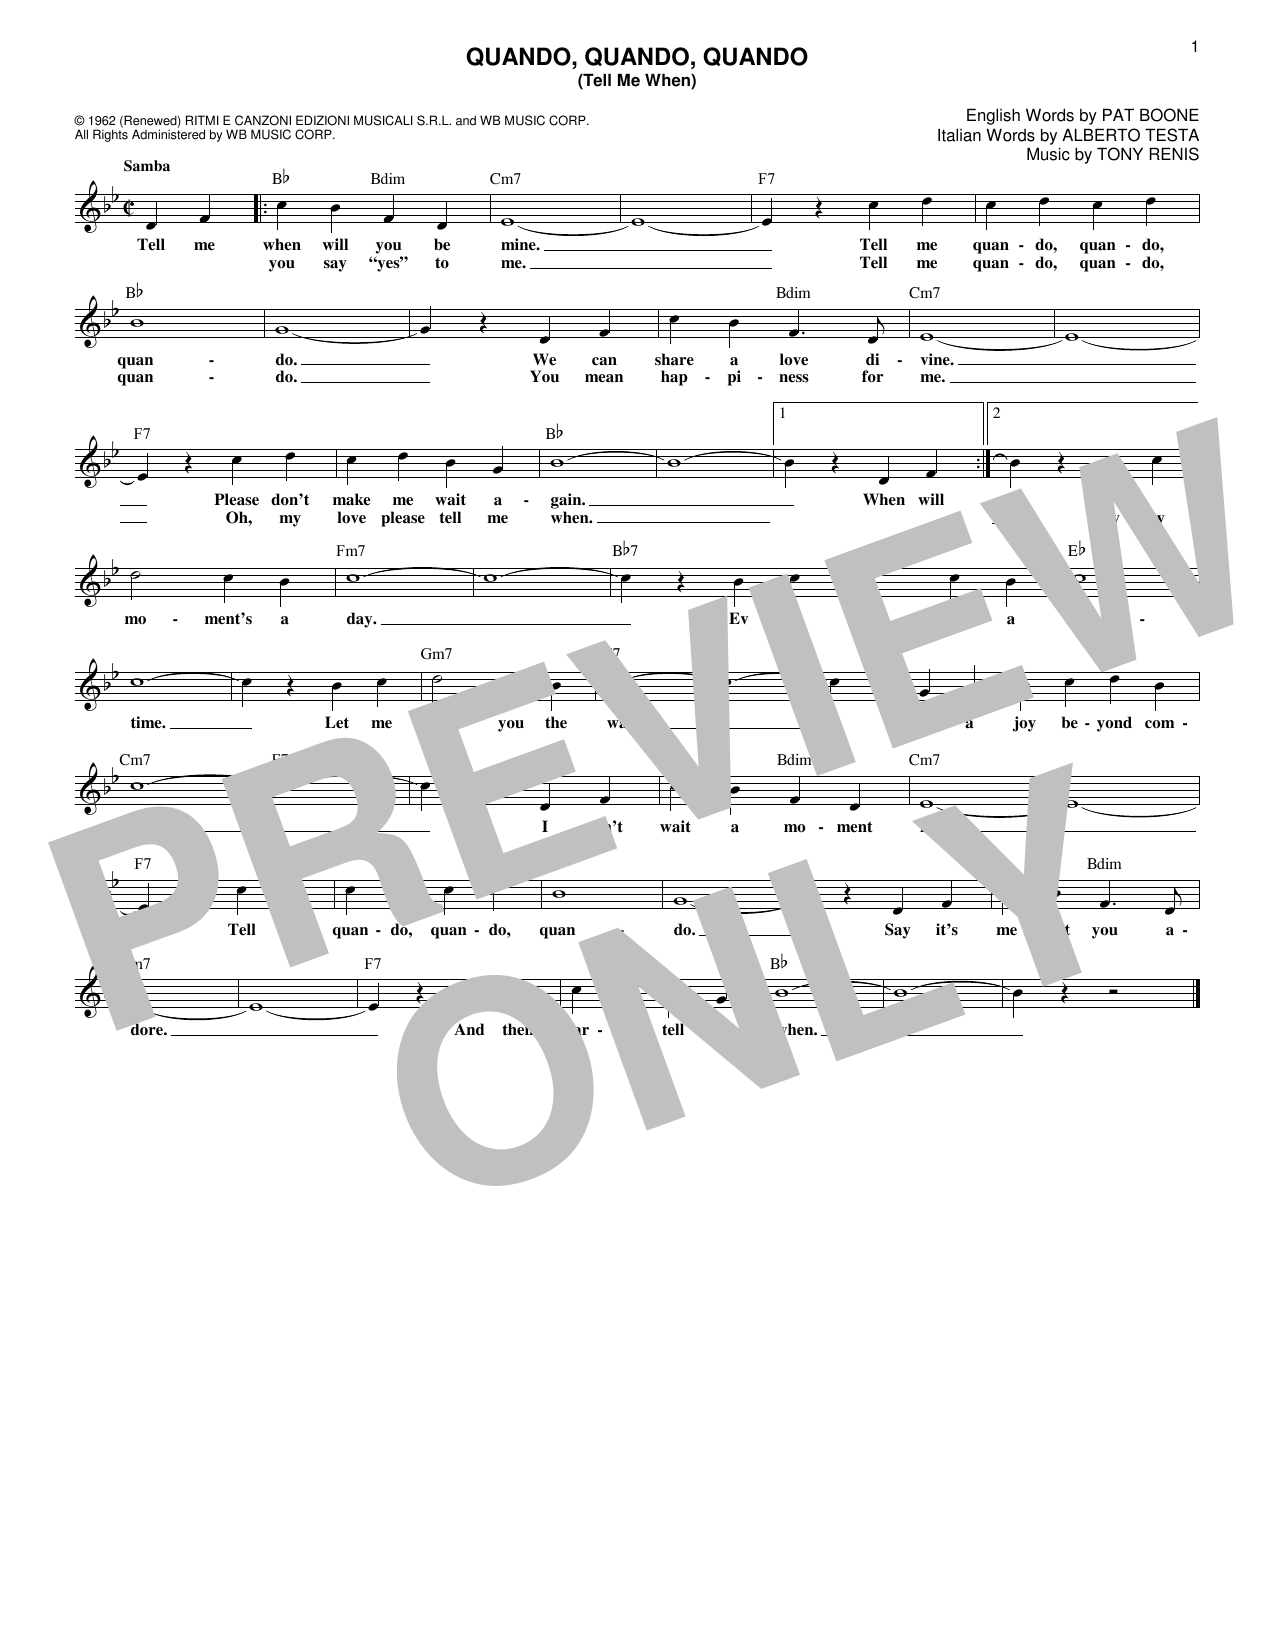 Alberto Testa Quando, Quando, Quando (Tell Me When) Sheet Music Notes & Chords for Real Book – Melody & Chords - Download or Print PDF